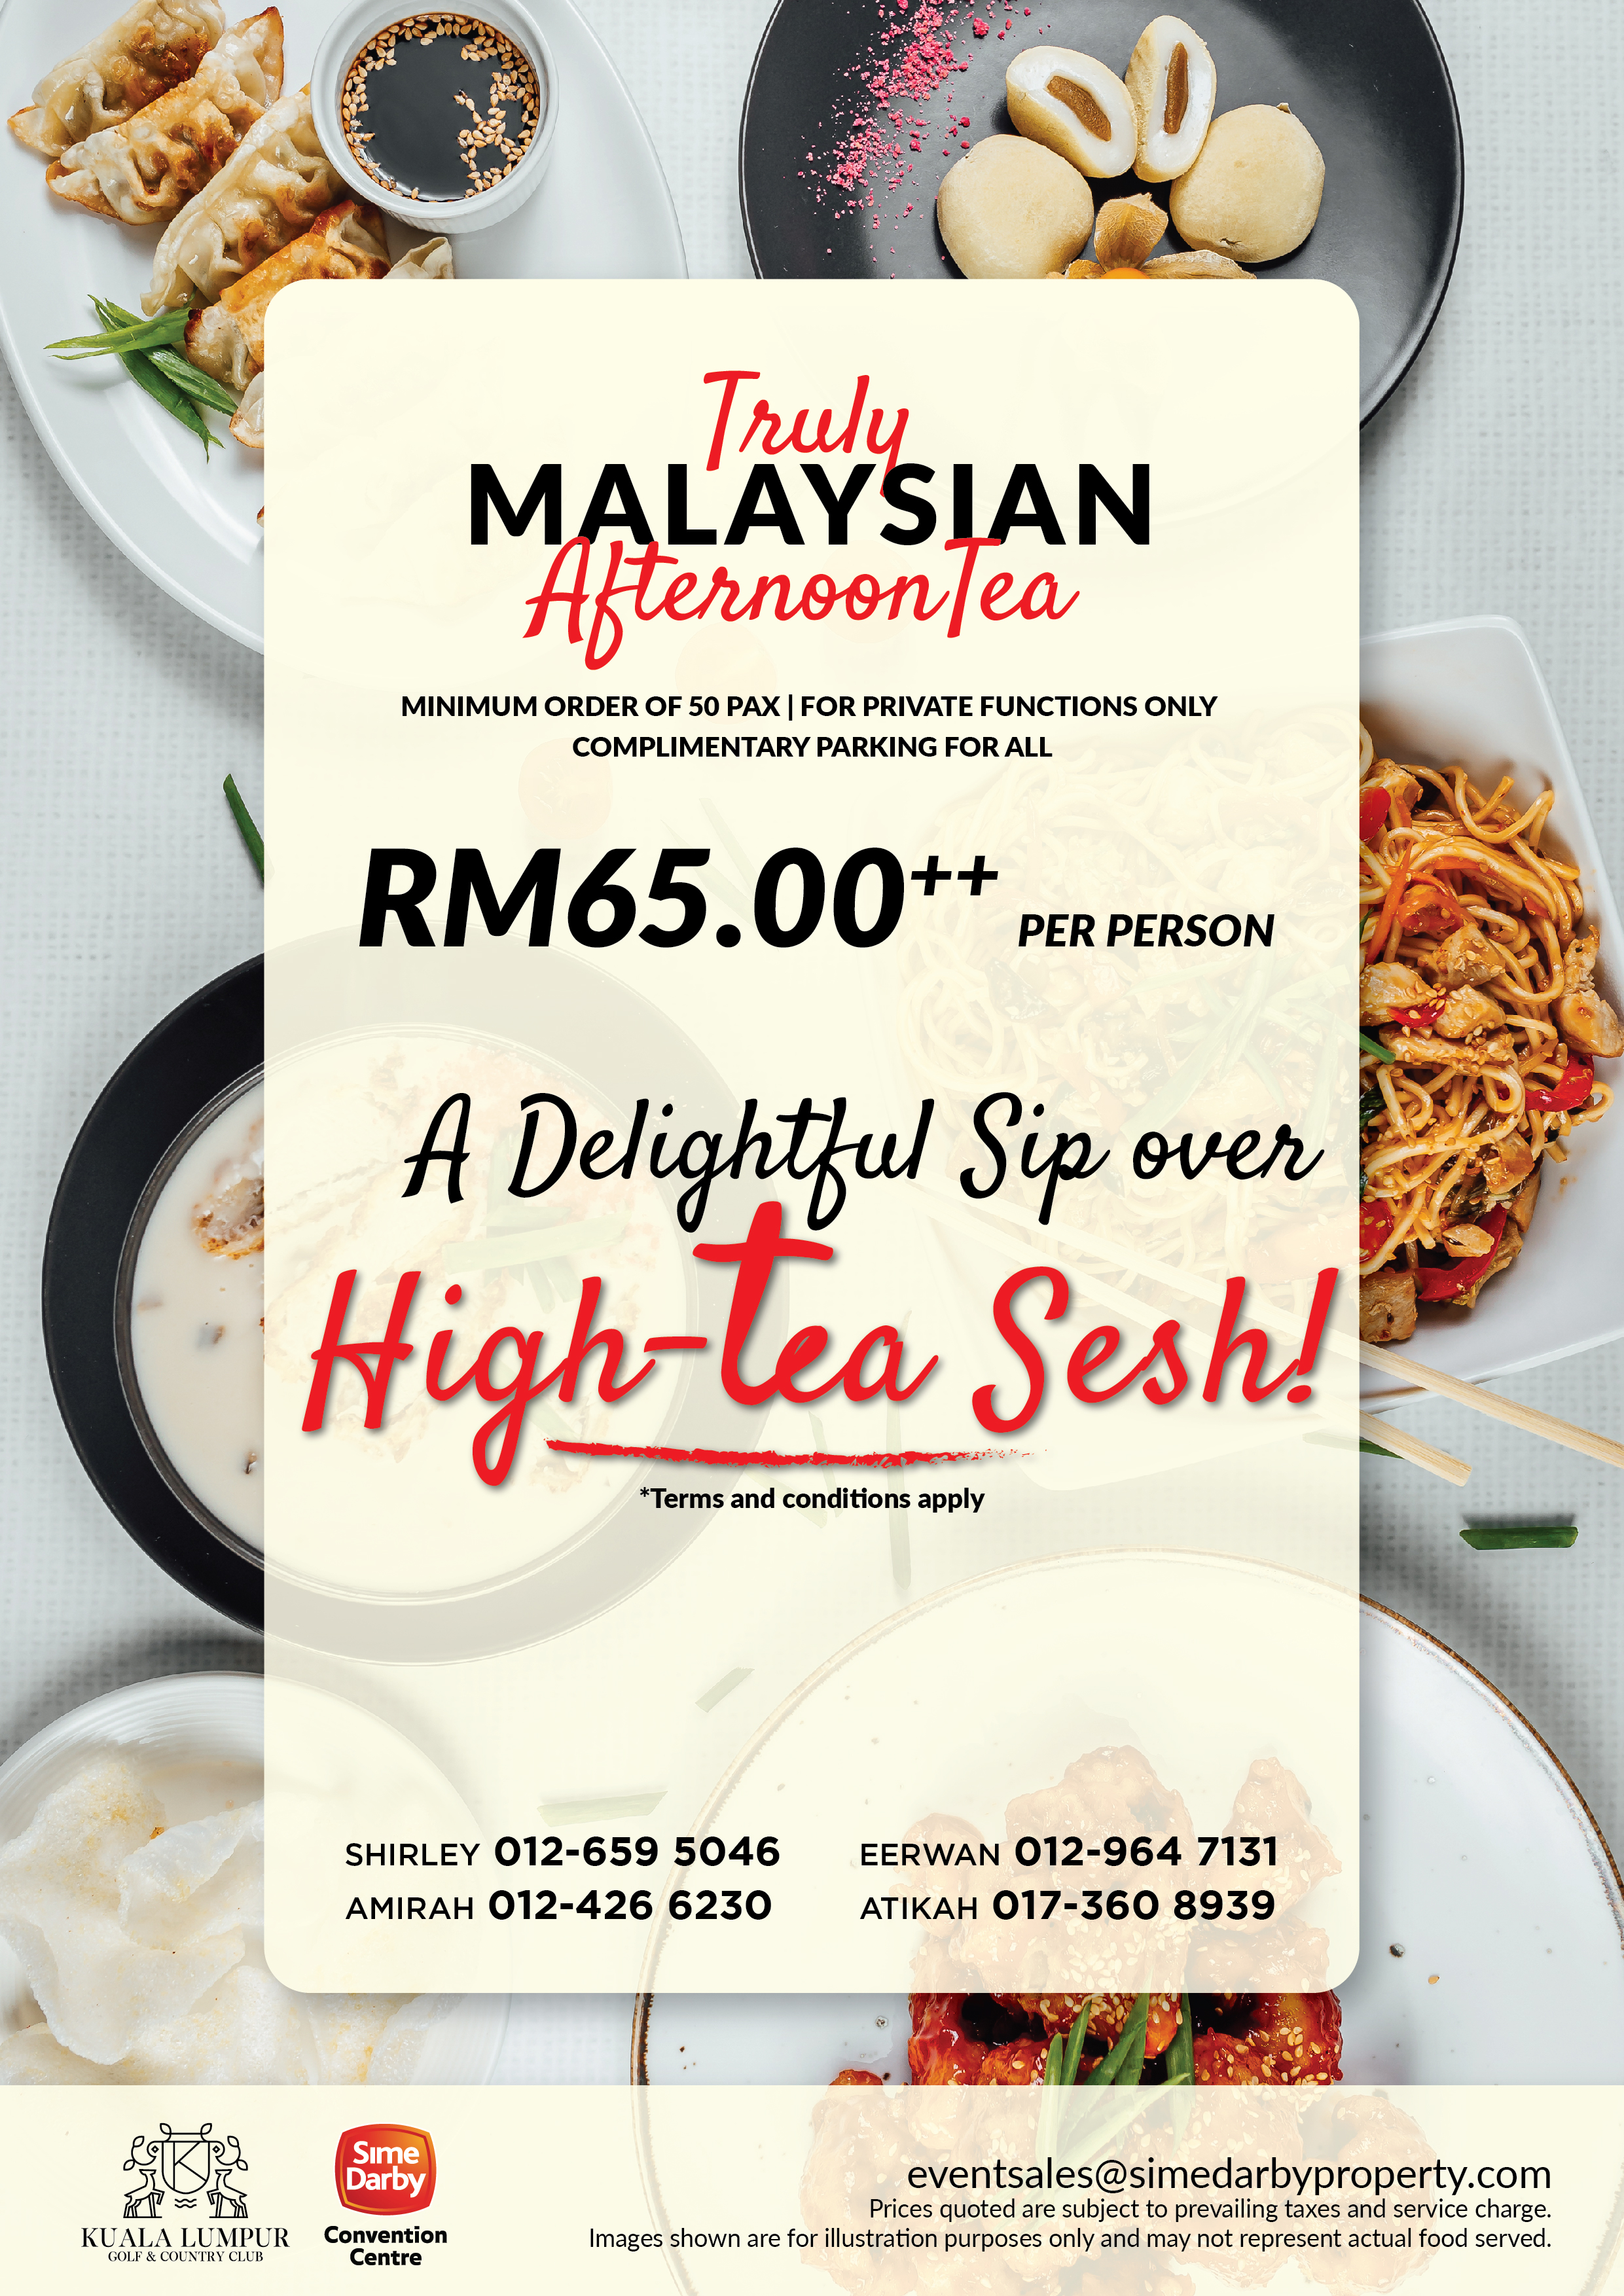 TRULY MALAYSIAN AFTERNOON TEA